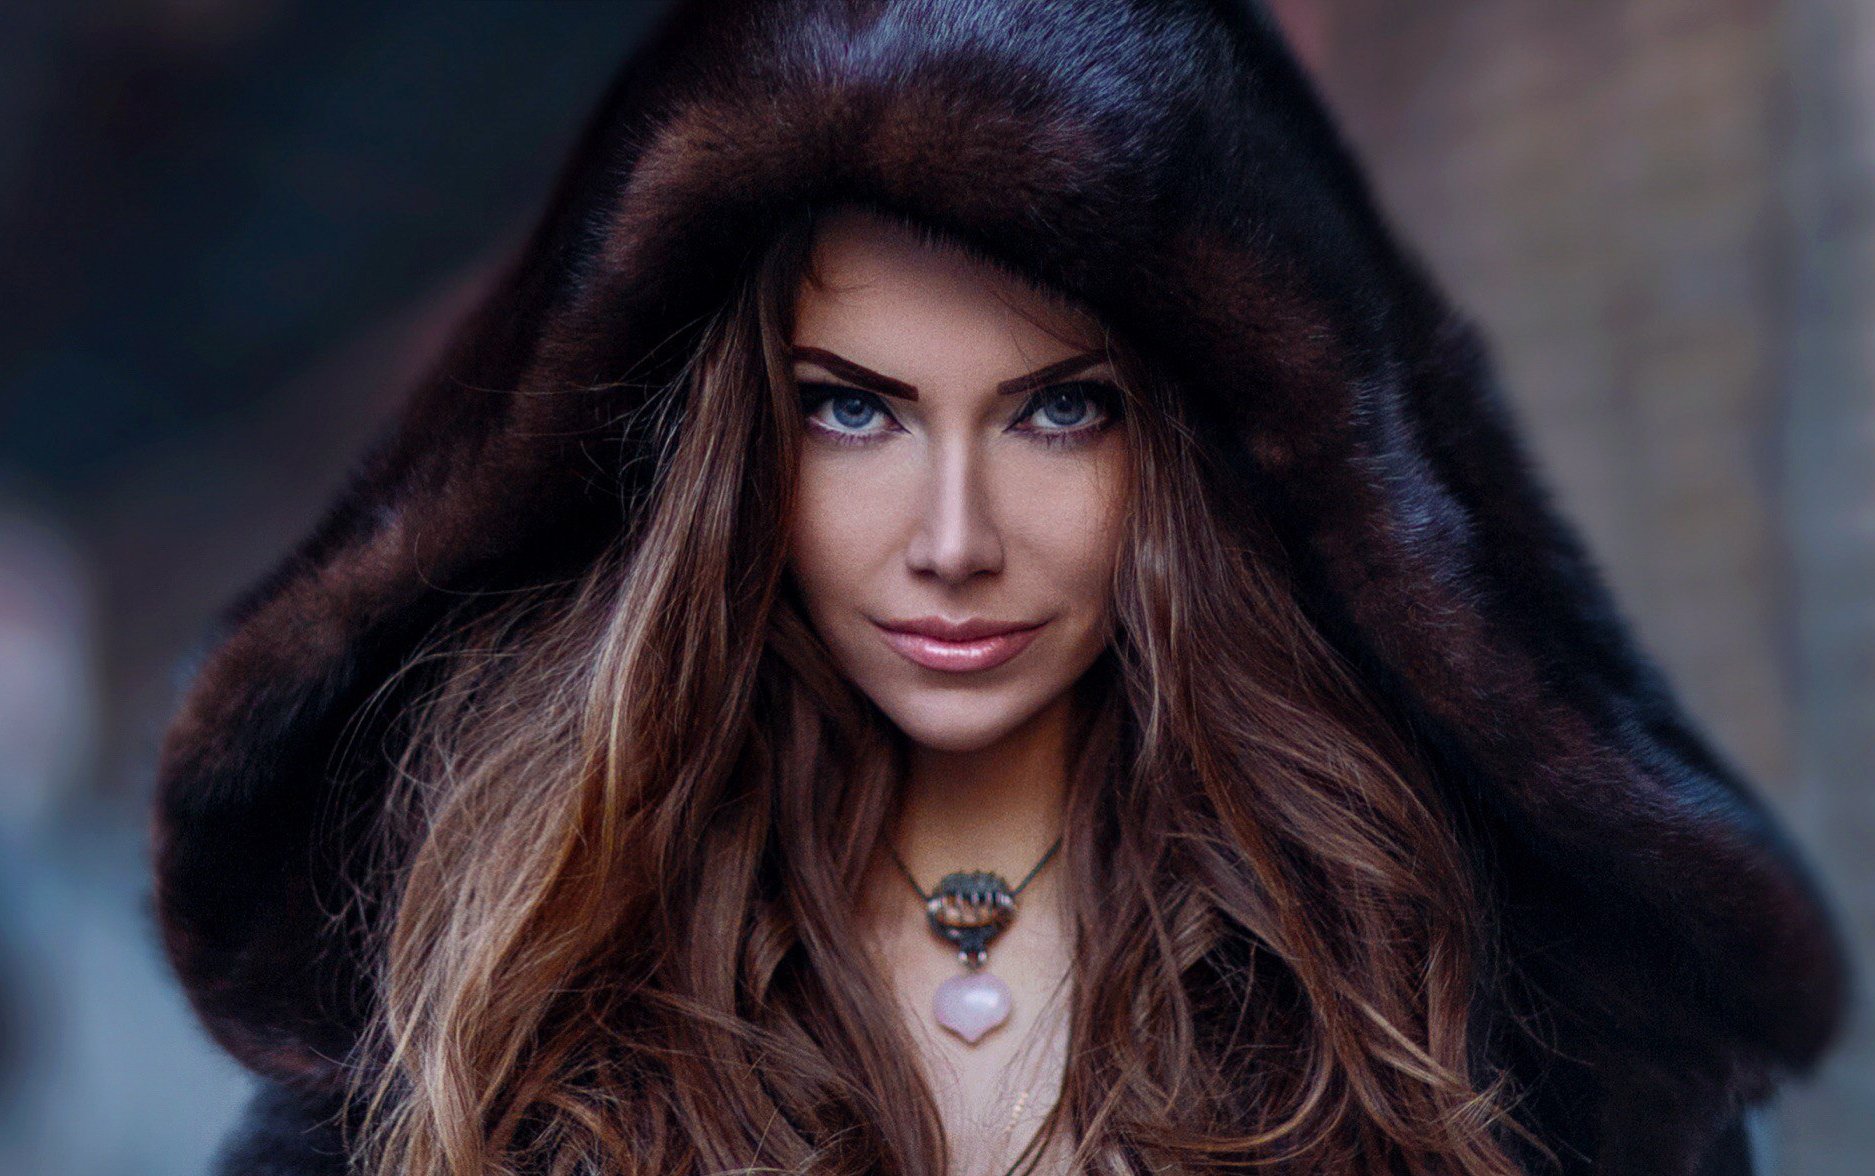 #portrait #beautiful #model #russia #moscow # #canon #sigma #natural #light #портретарт #модель #portrait #art, Hakan Erenler